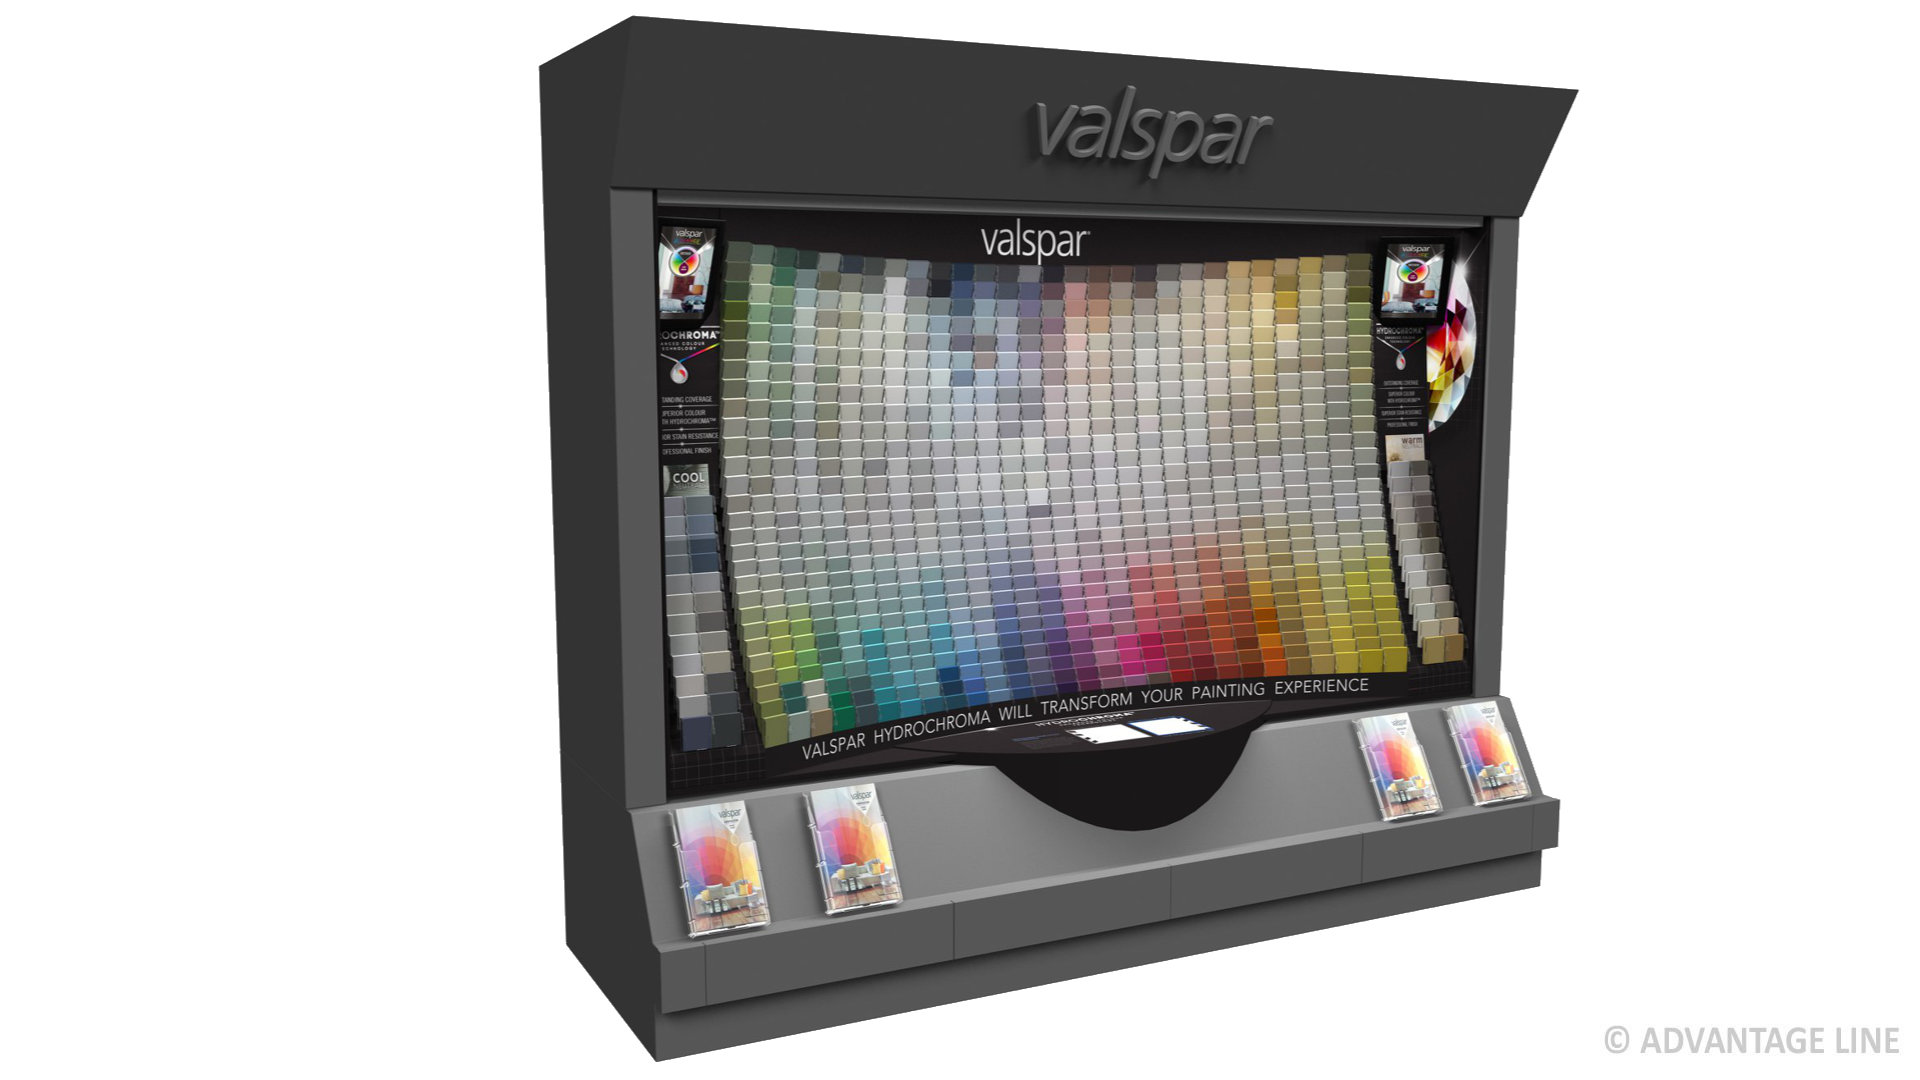 Valspar Colour Display by Advantage Line